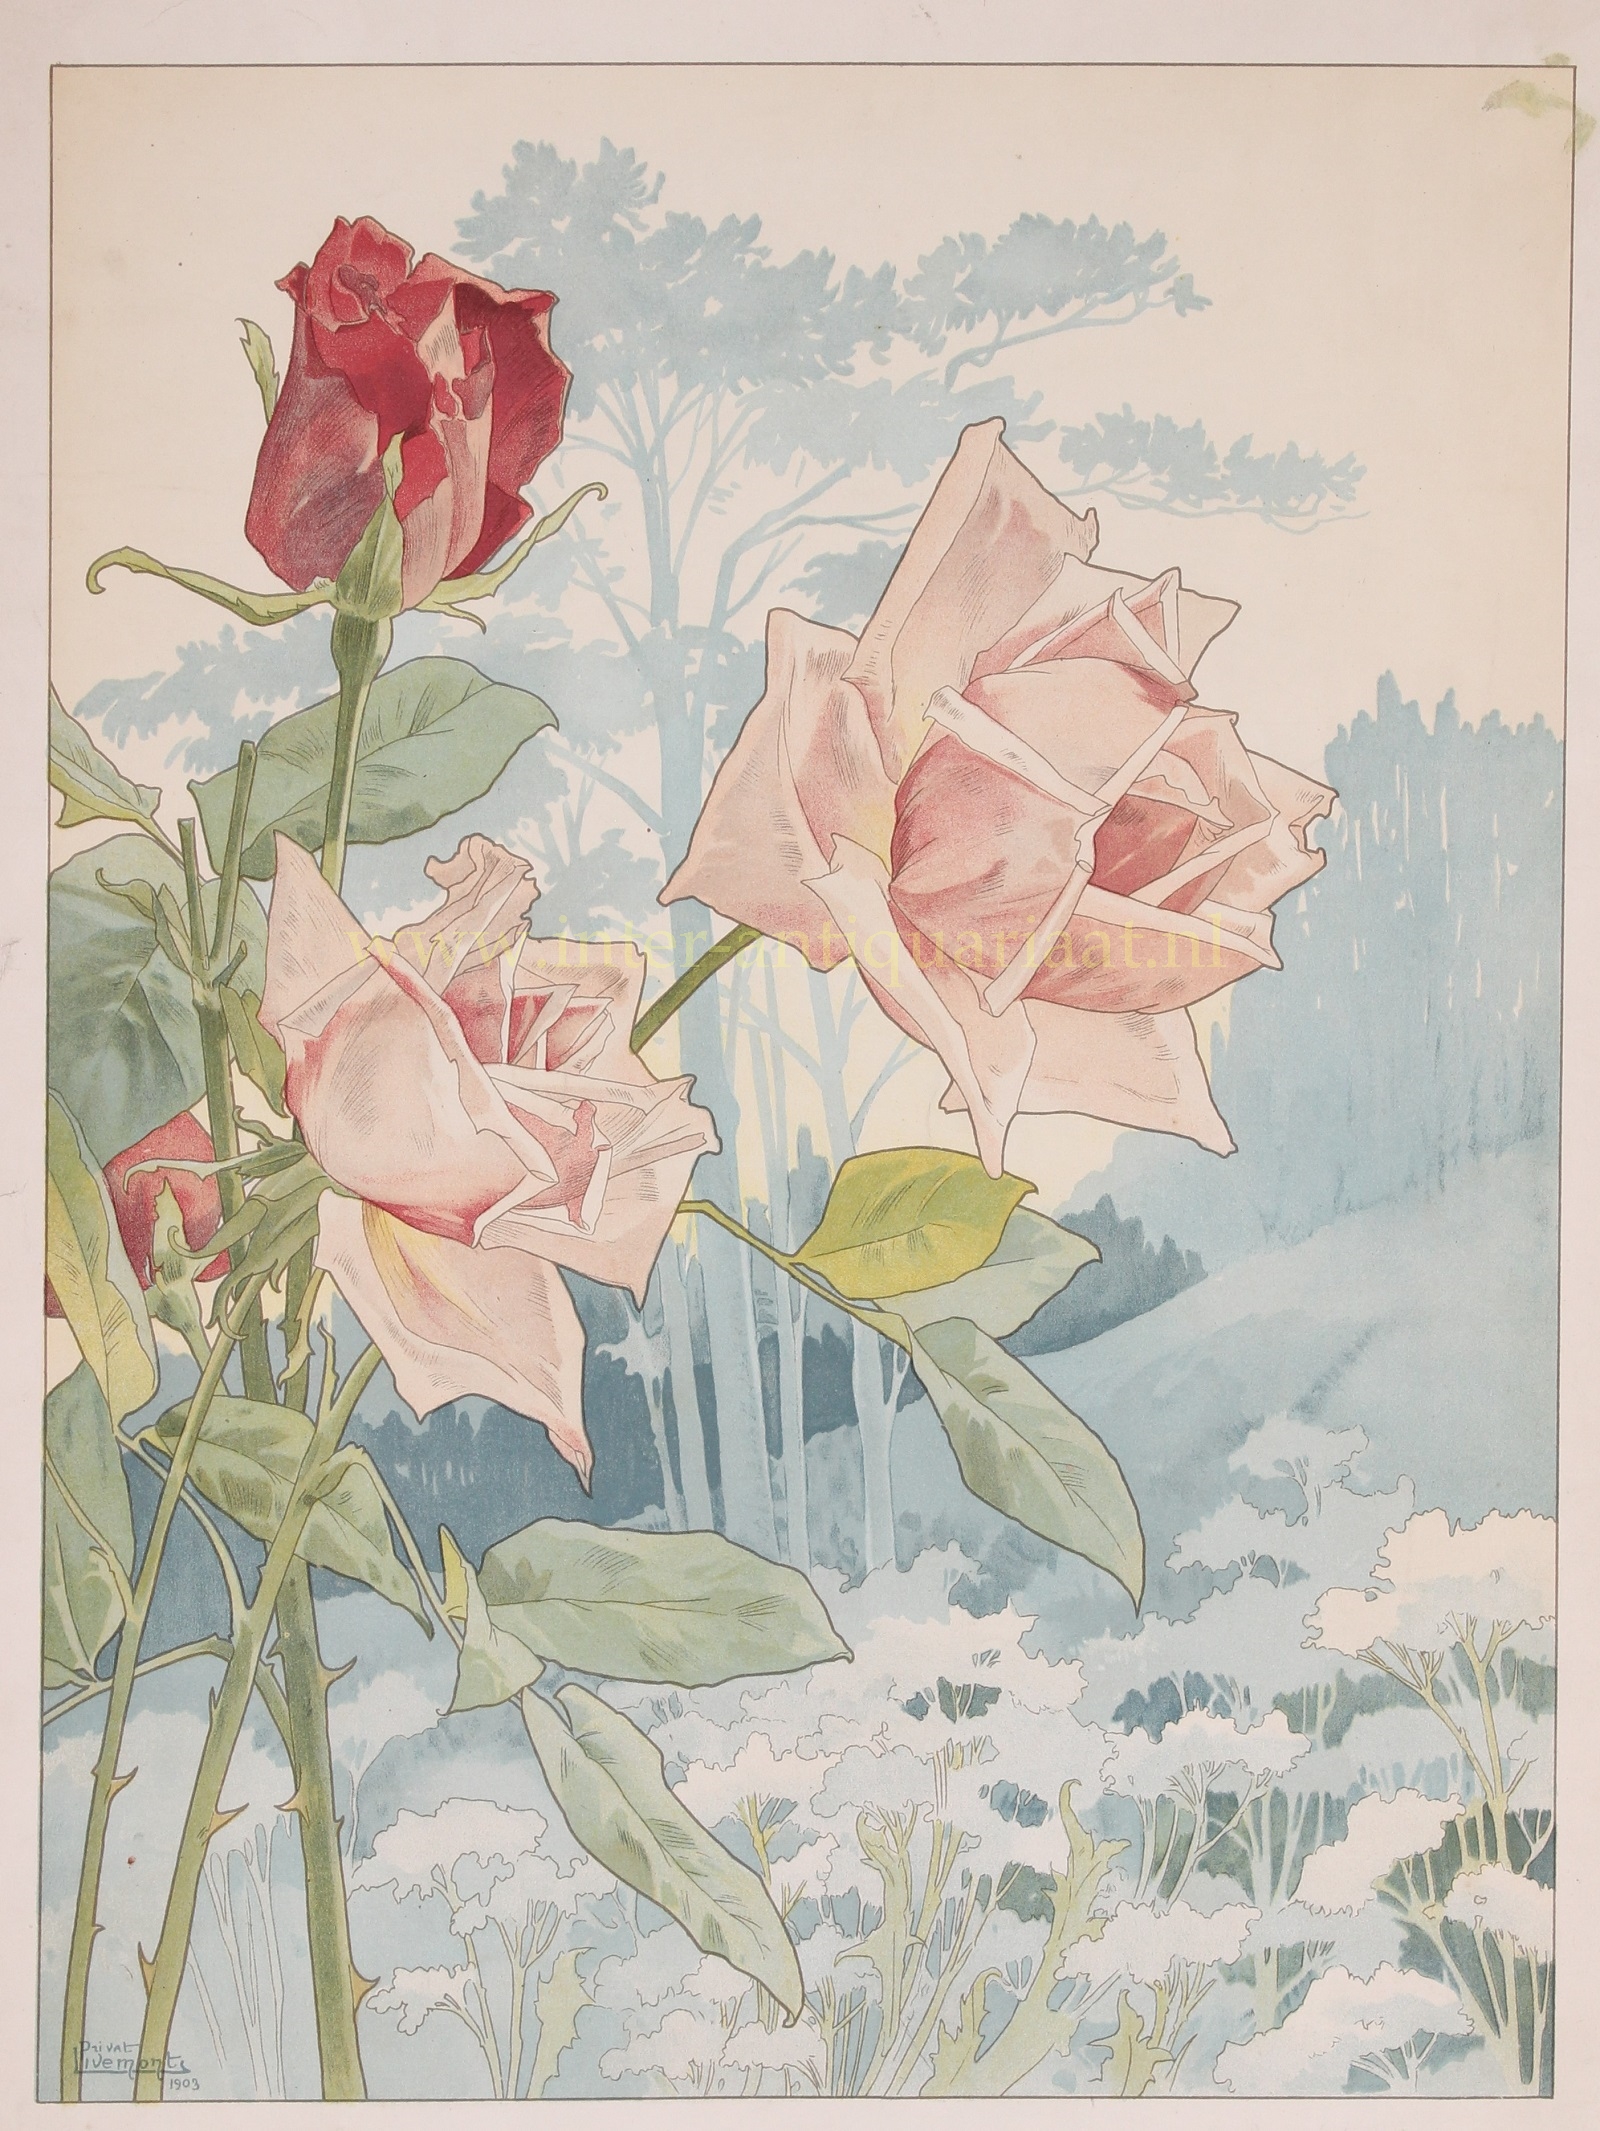 Privat-Livemont-- Henri (18611936) - Roses - Henri Privat-Livemont, c. 1900